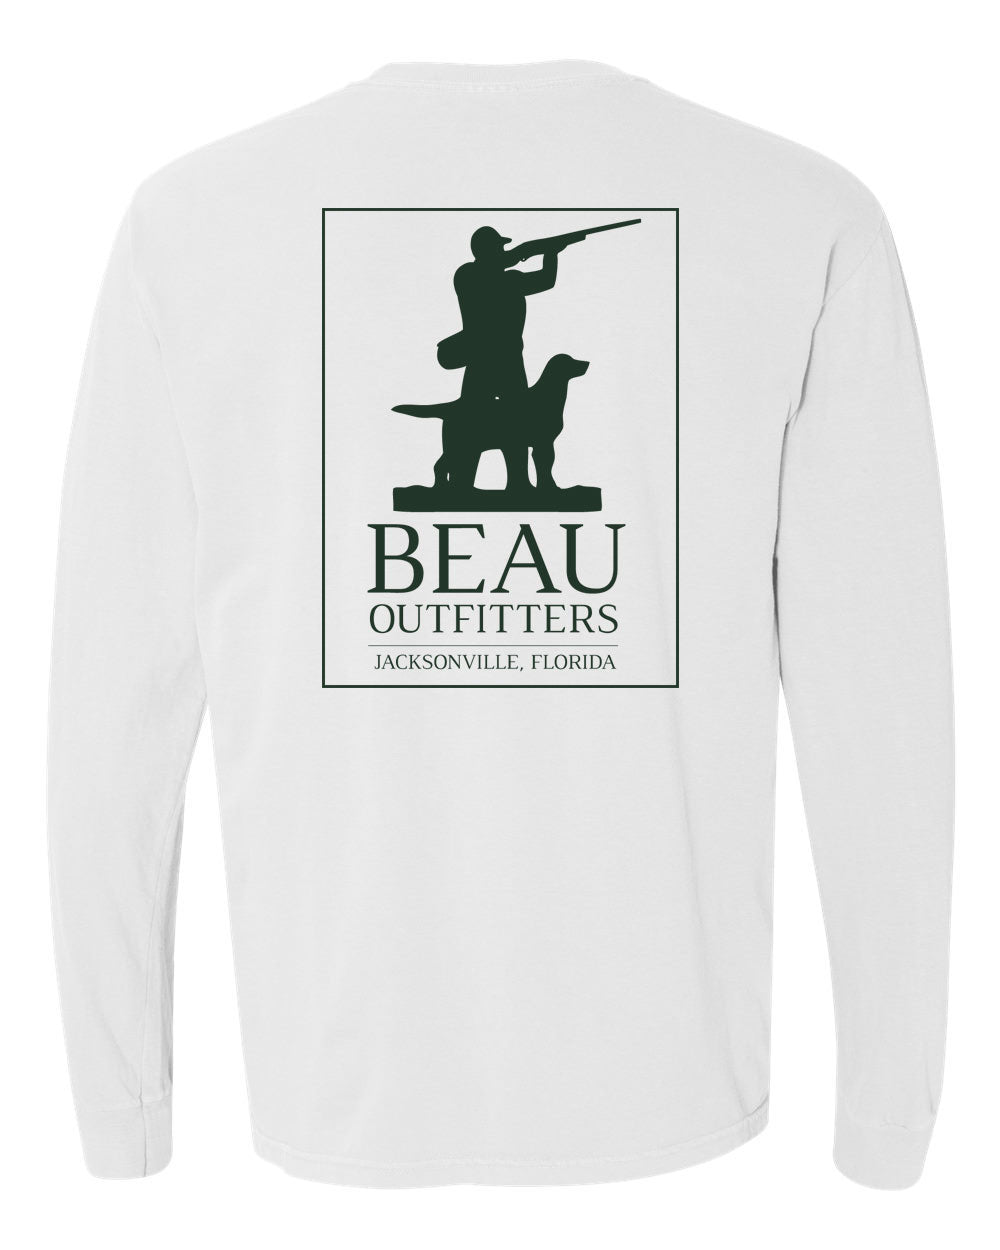 LS Beau Original Logo T-Shirt